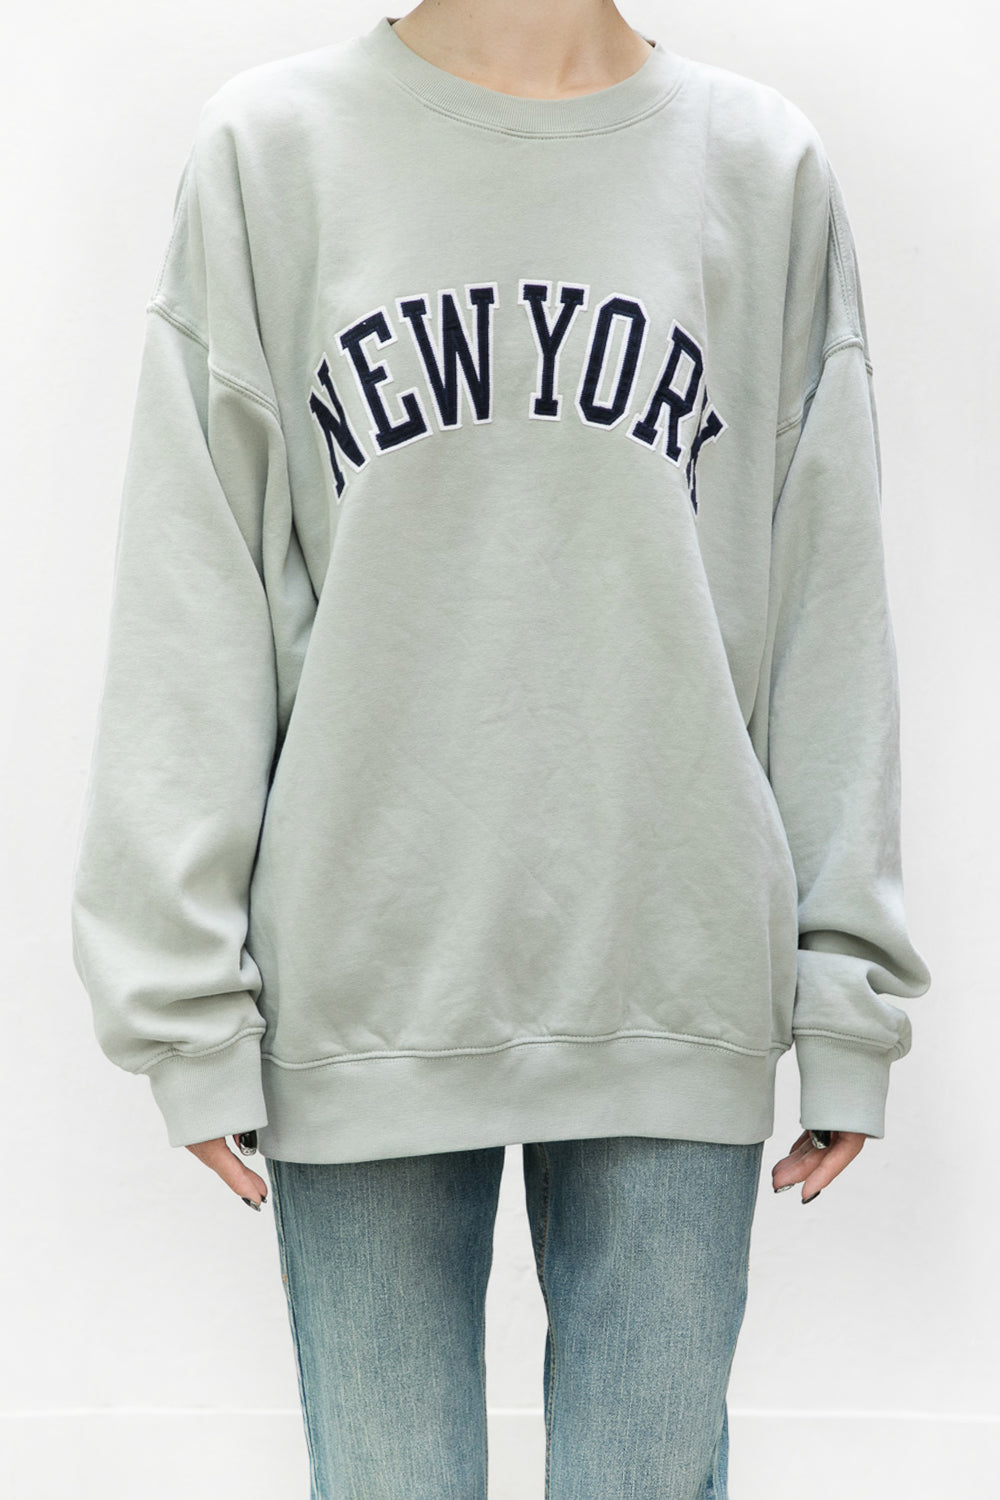 Erica NewYork Sweatshirt – Brandy Melville Online Japan